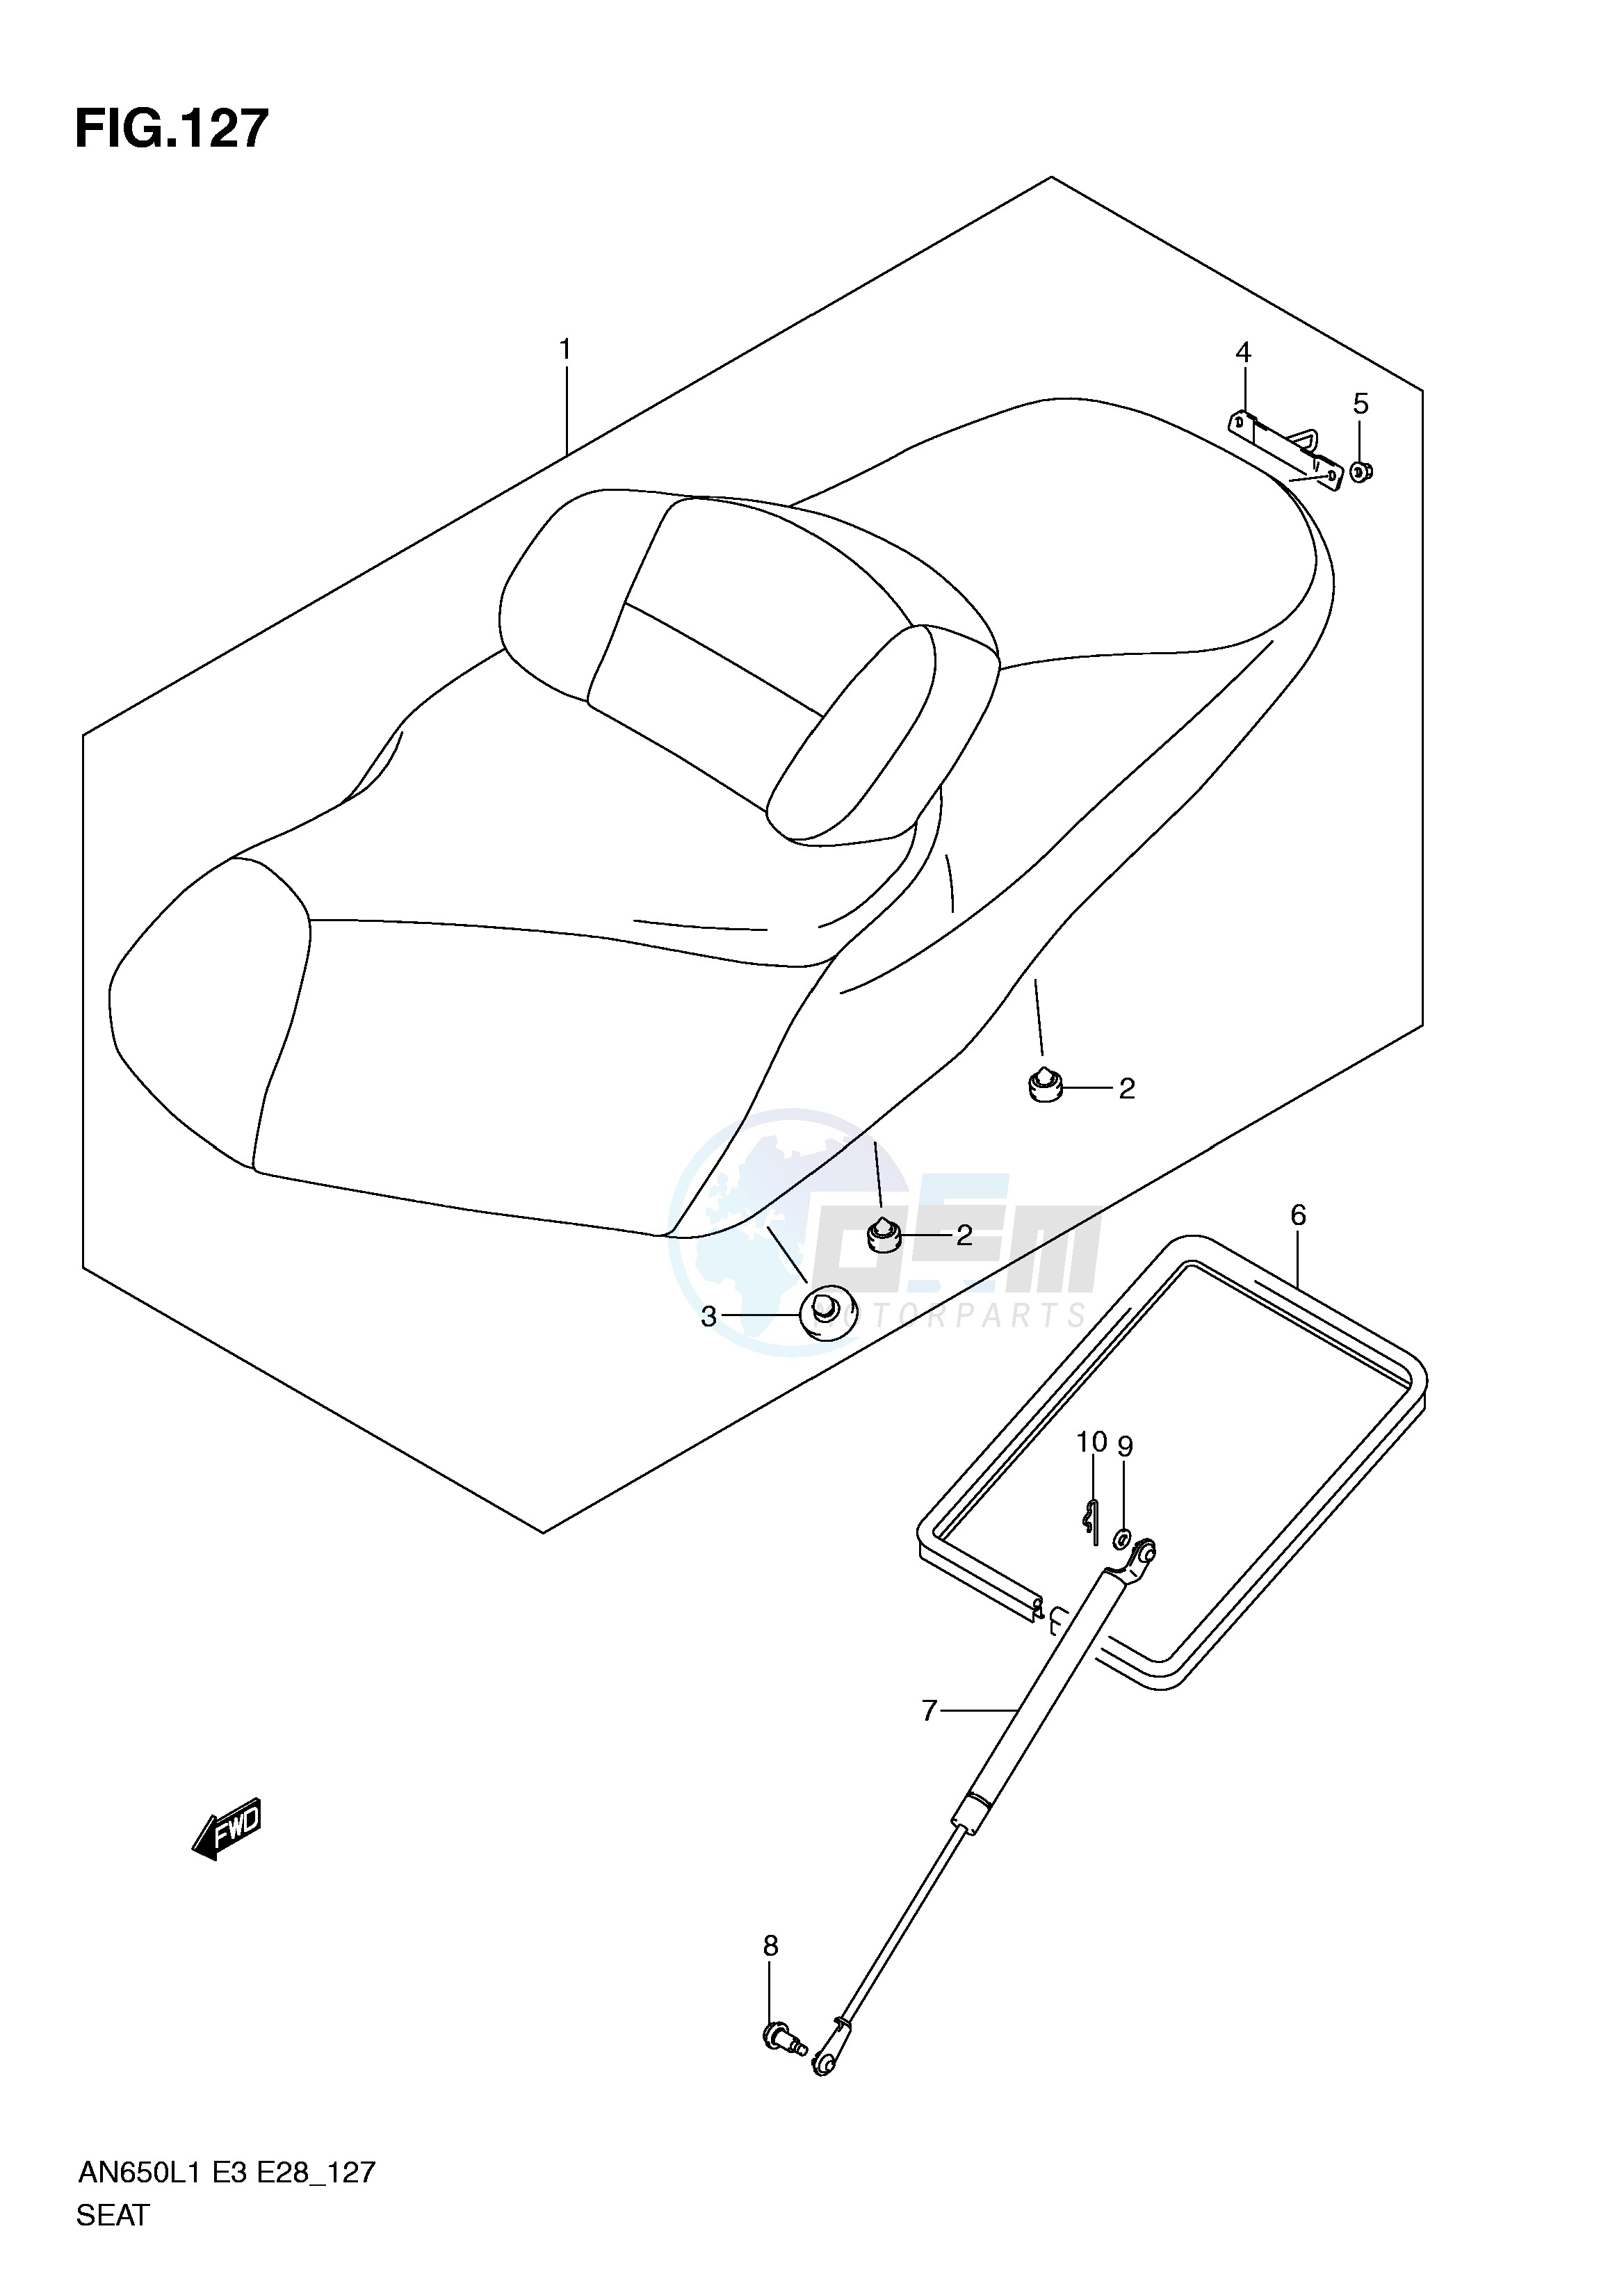 SEAT (AN650AL1 E28) blueprint